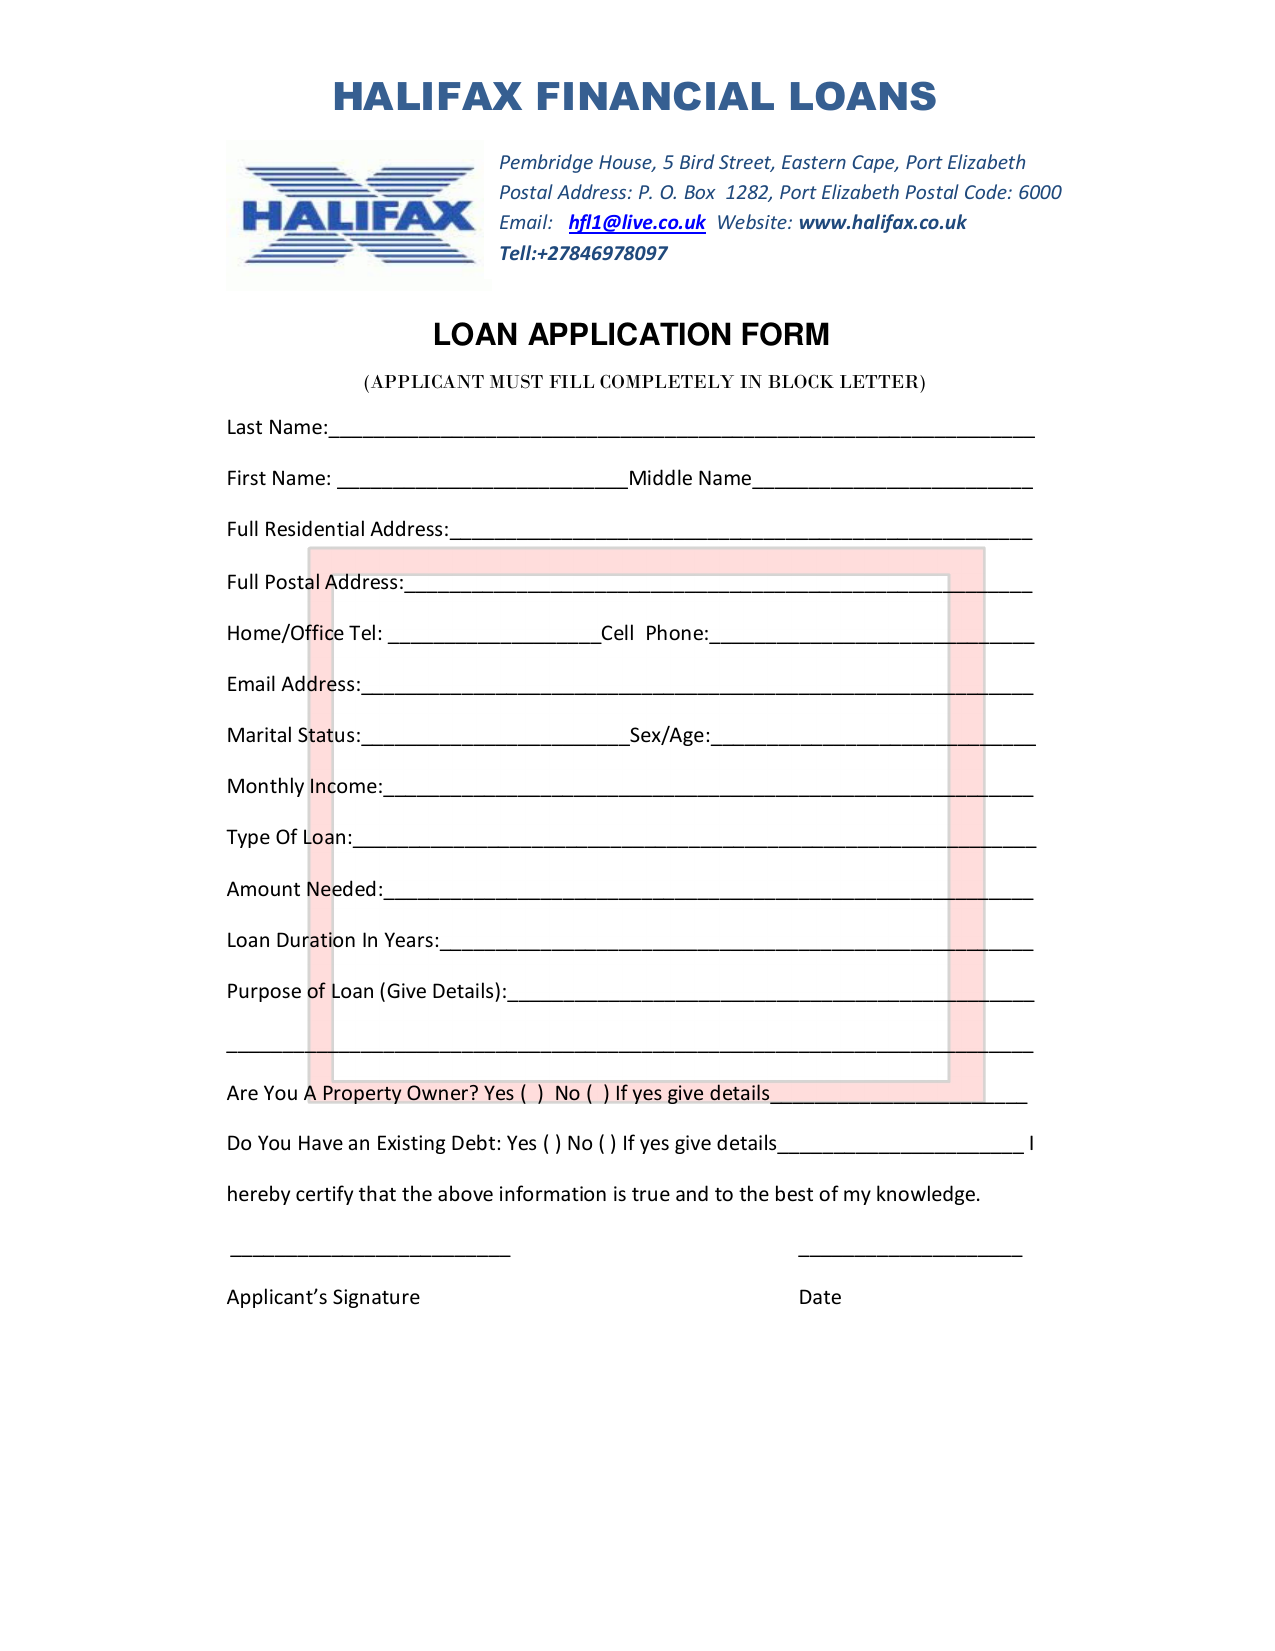 Halifax Financial Loans Application Form